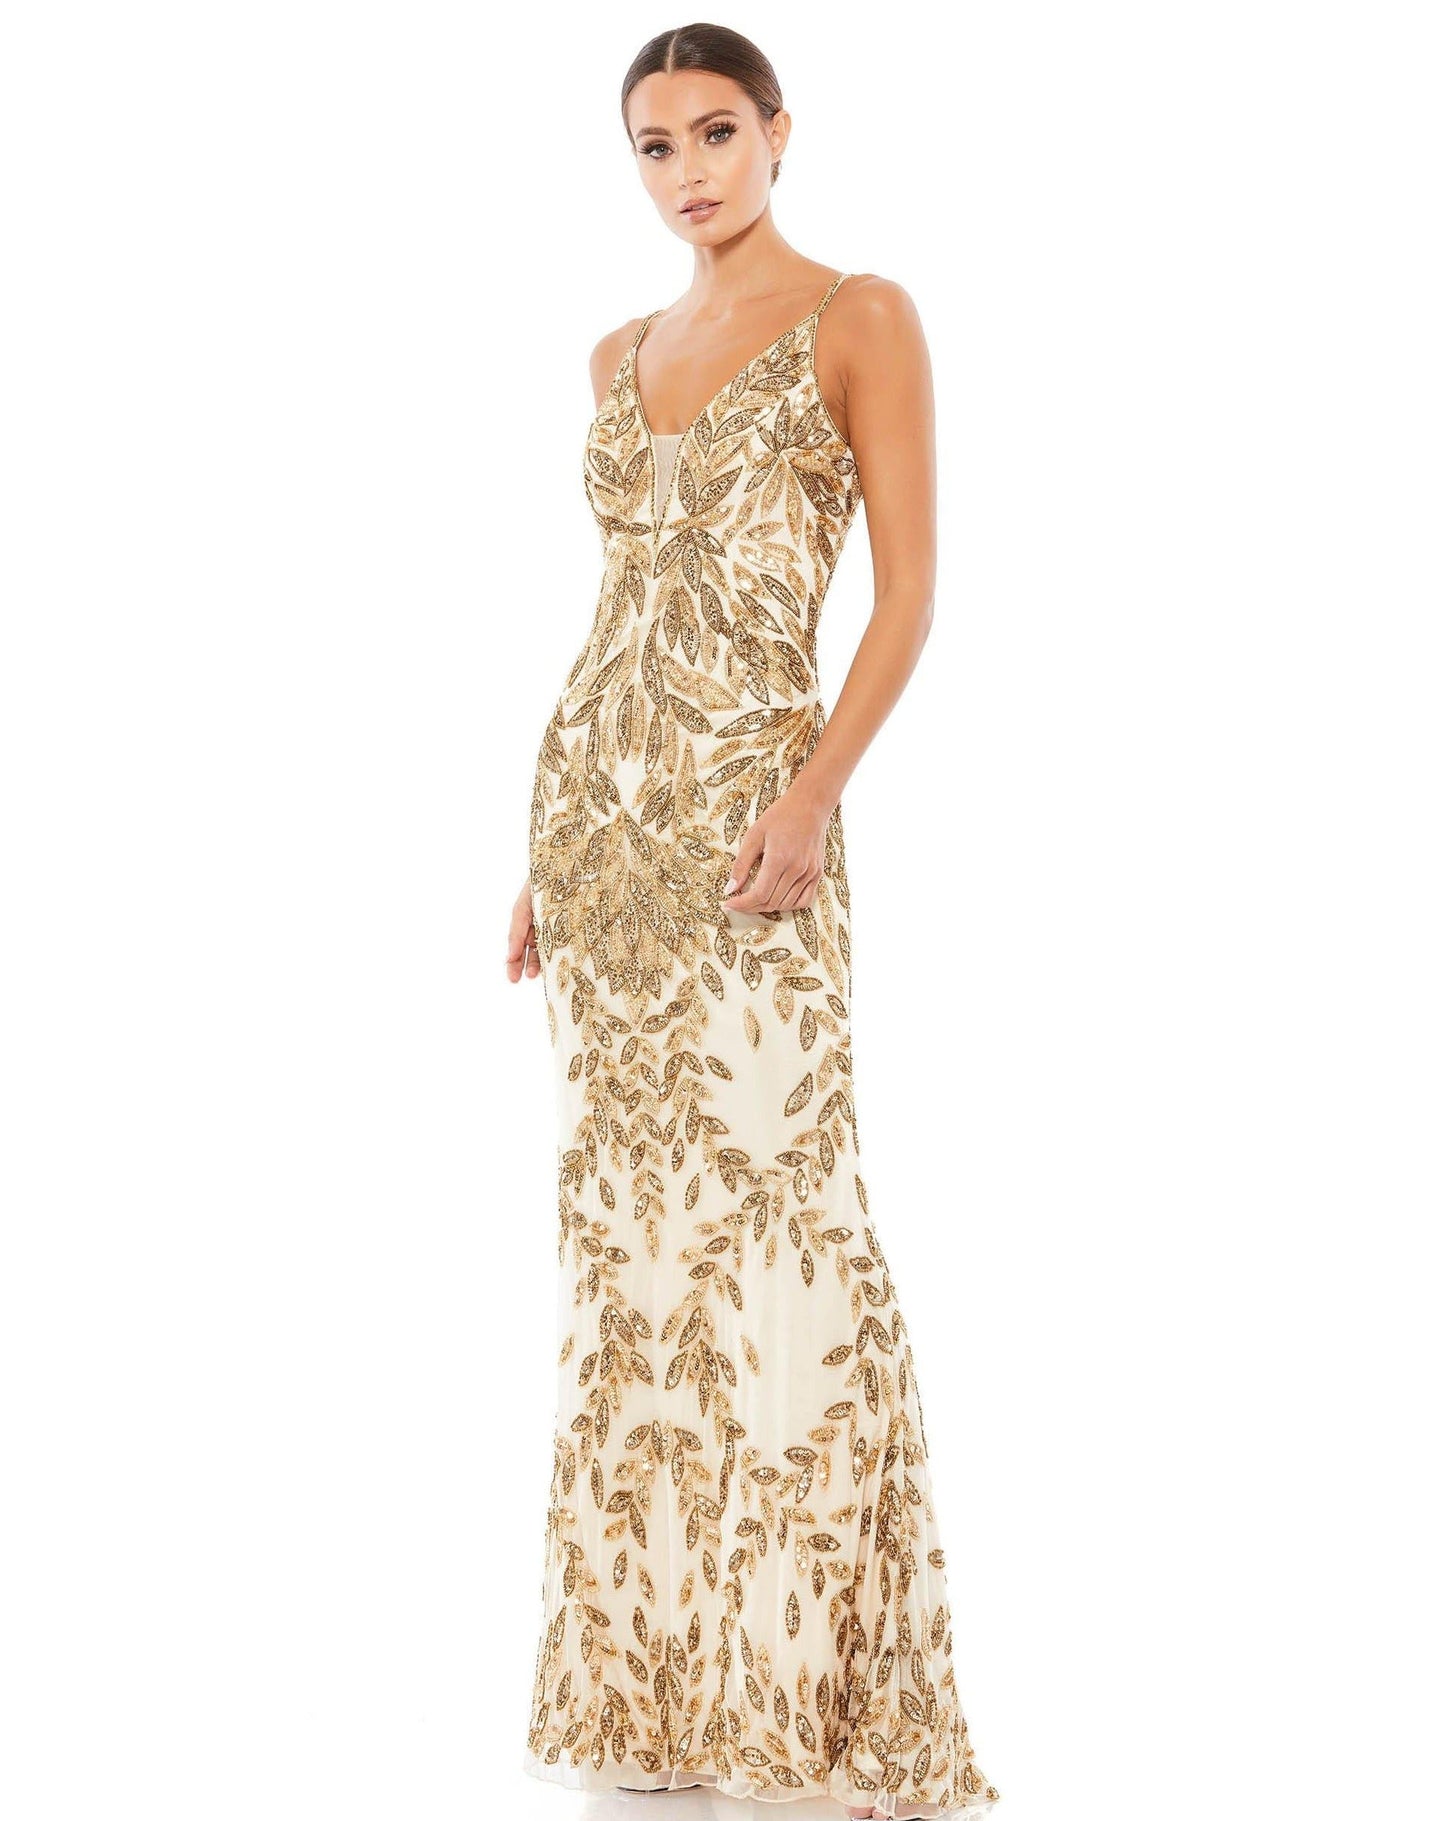 Mac Duggal Embellished Gold Leaf Evening Gown 5107 - The Dress Outlet